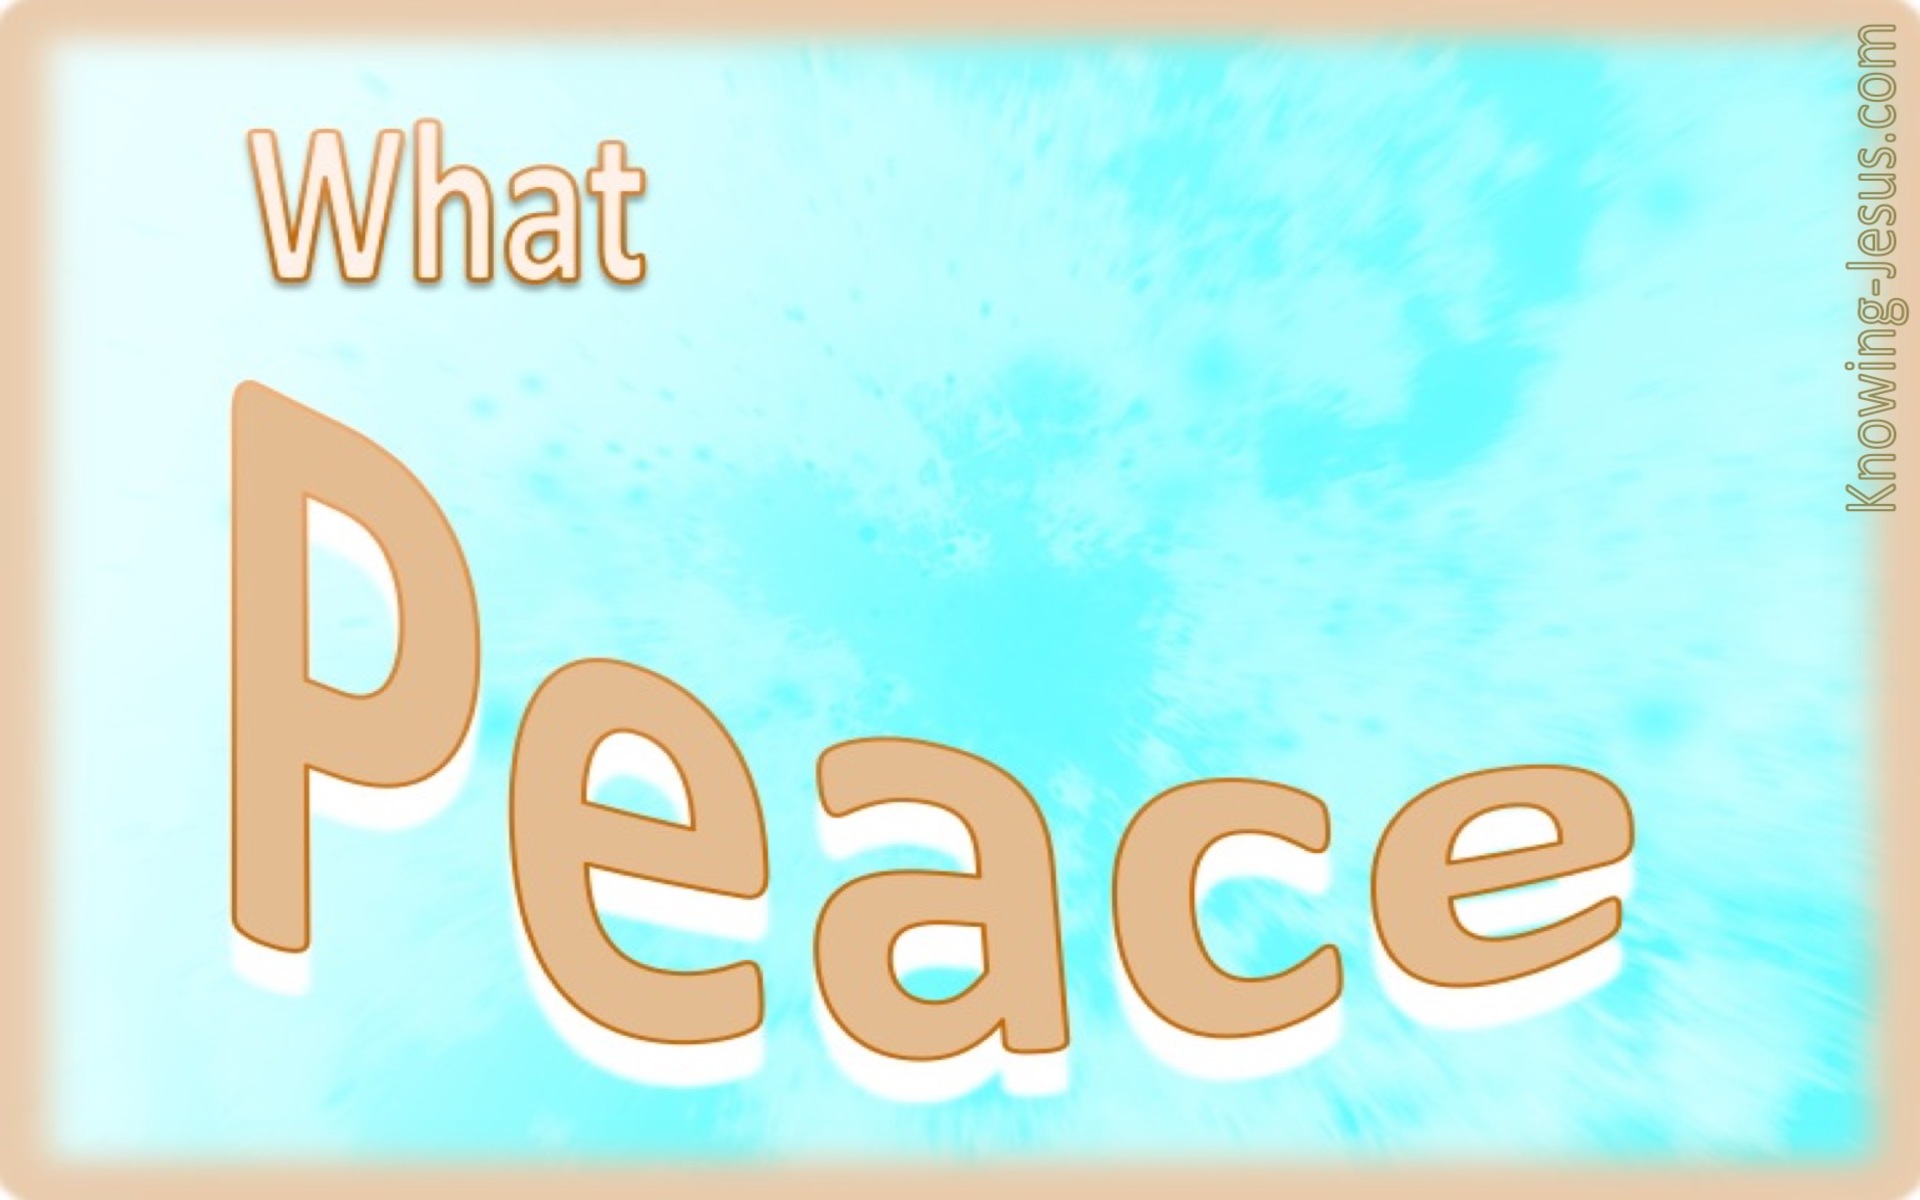 What Peace (aqua)